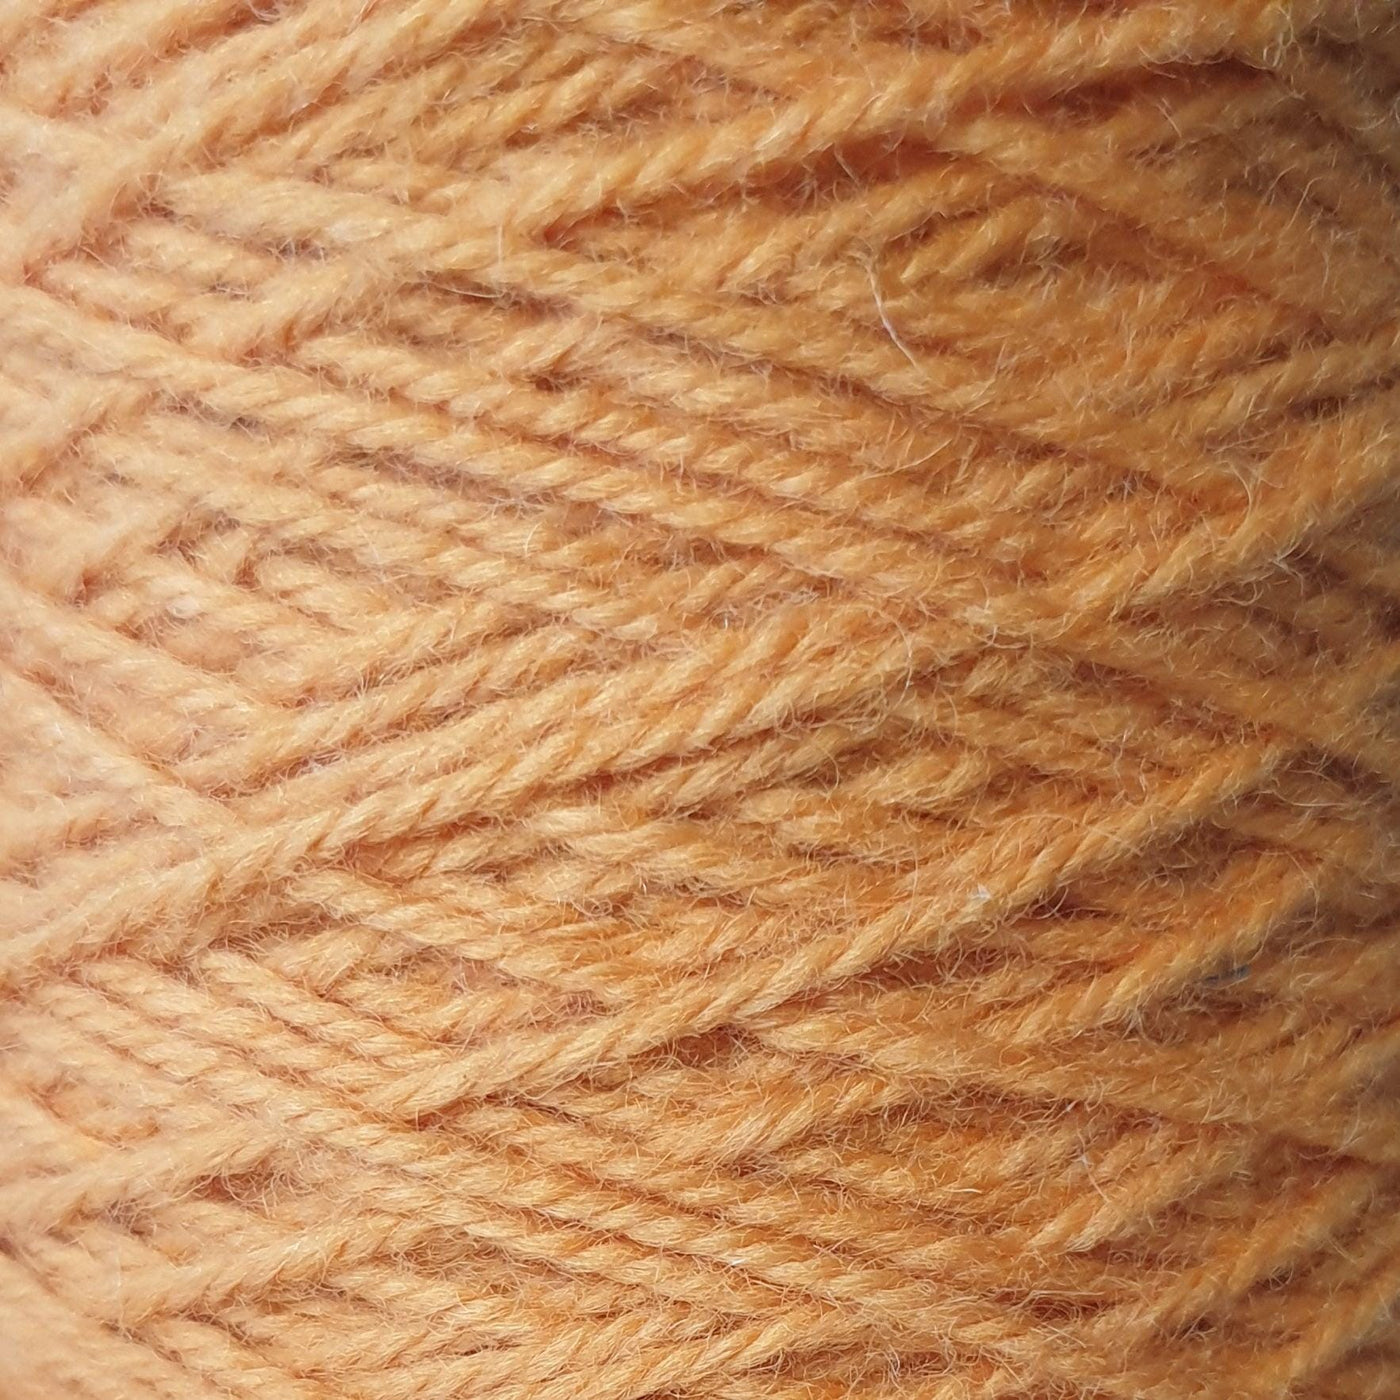 Rug tufting yarn - 100% NZ Wool - Large 500g cones - TuftCity